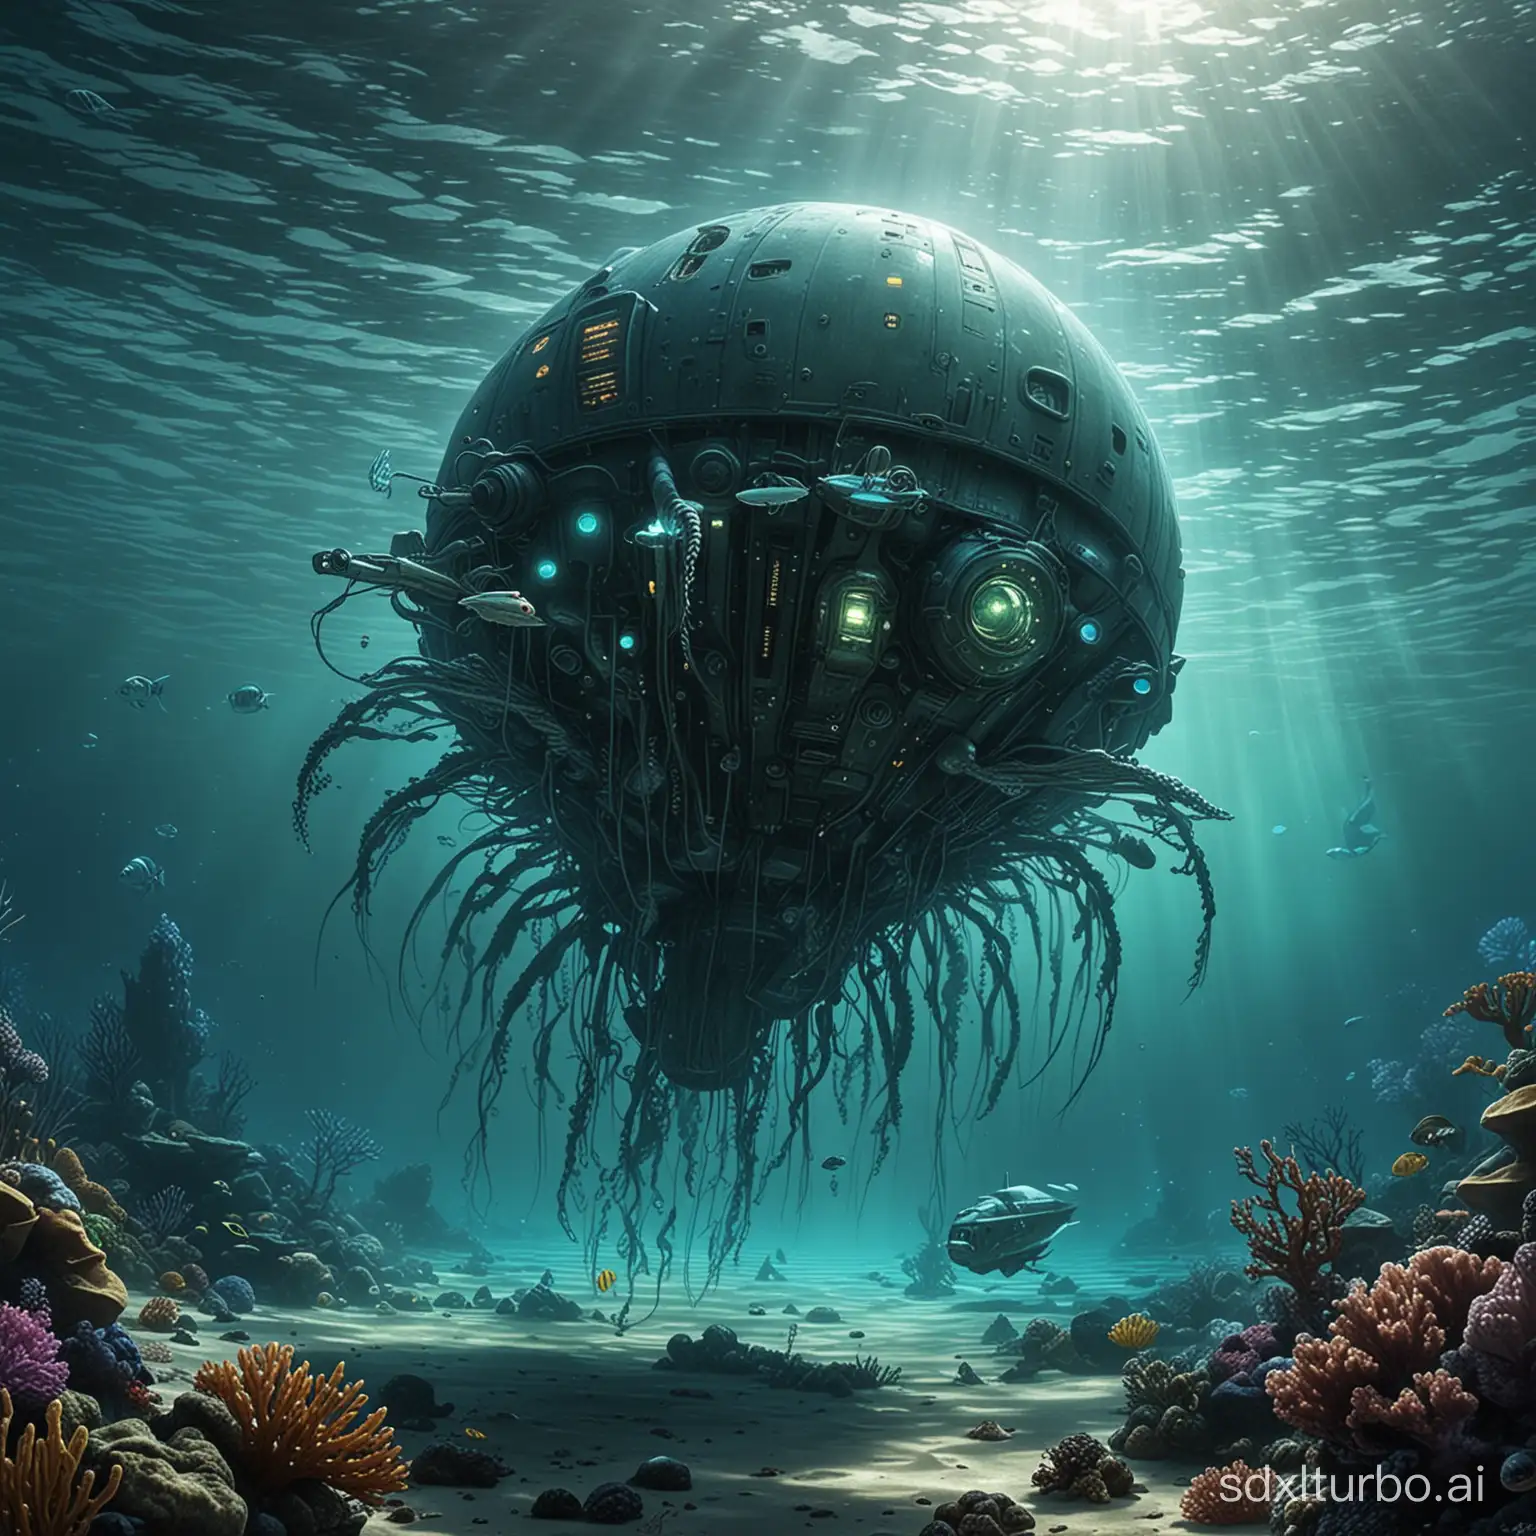 Futuristic-Underwater-Exploration-SciFi-Art-Depicting-the-Depths-of-the-Sea